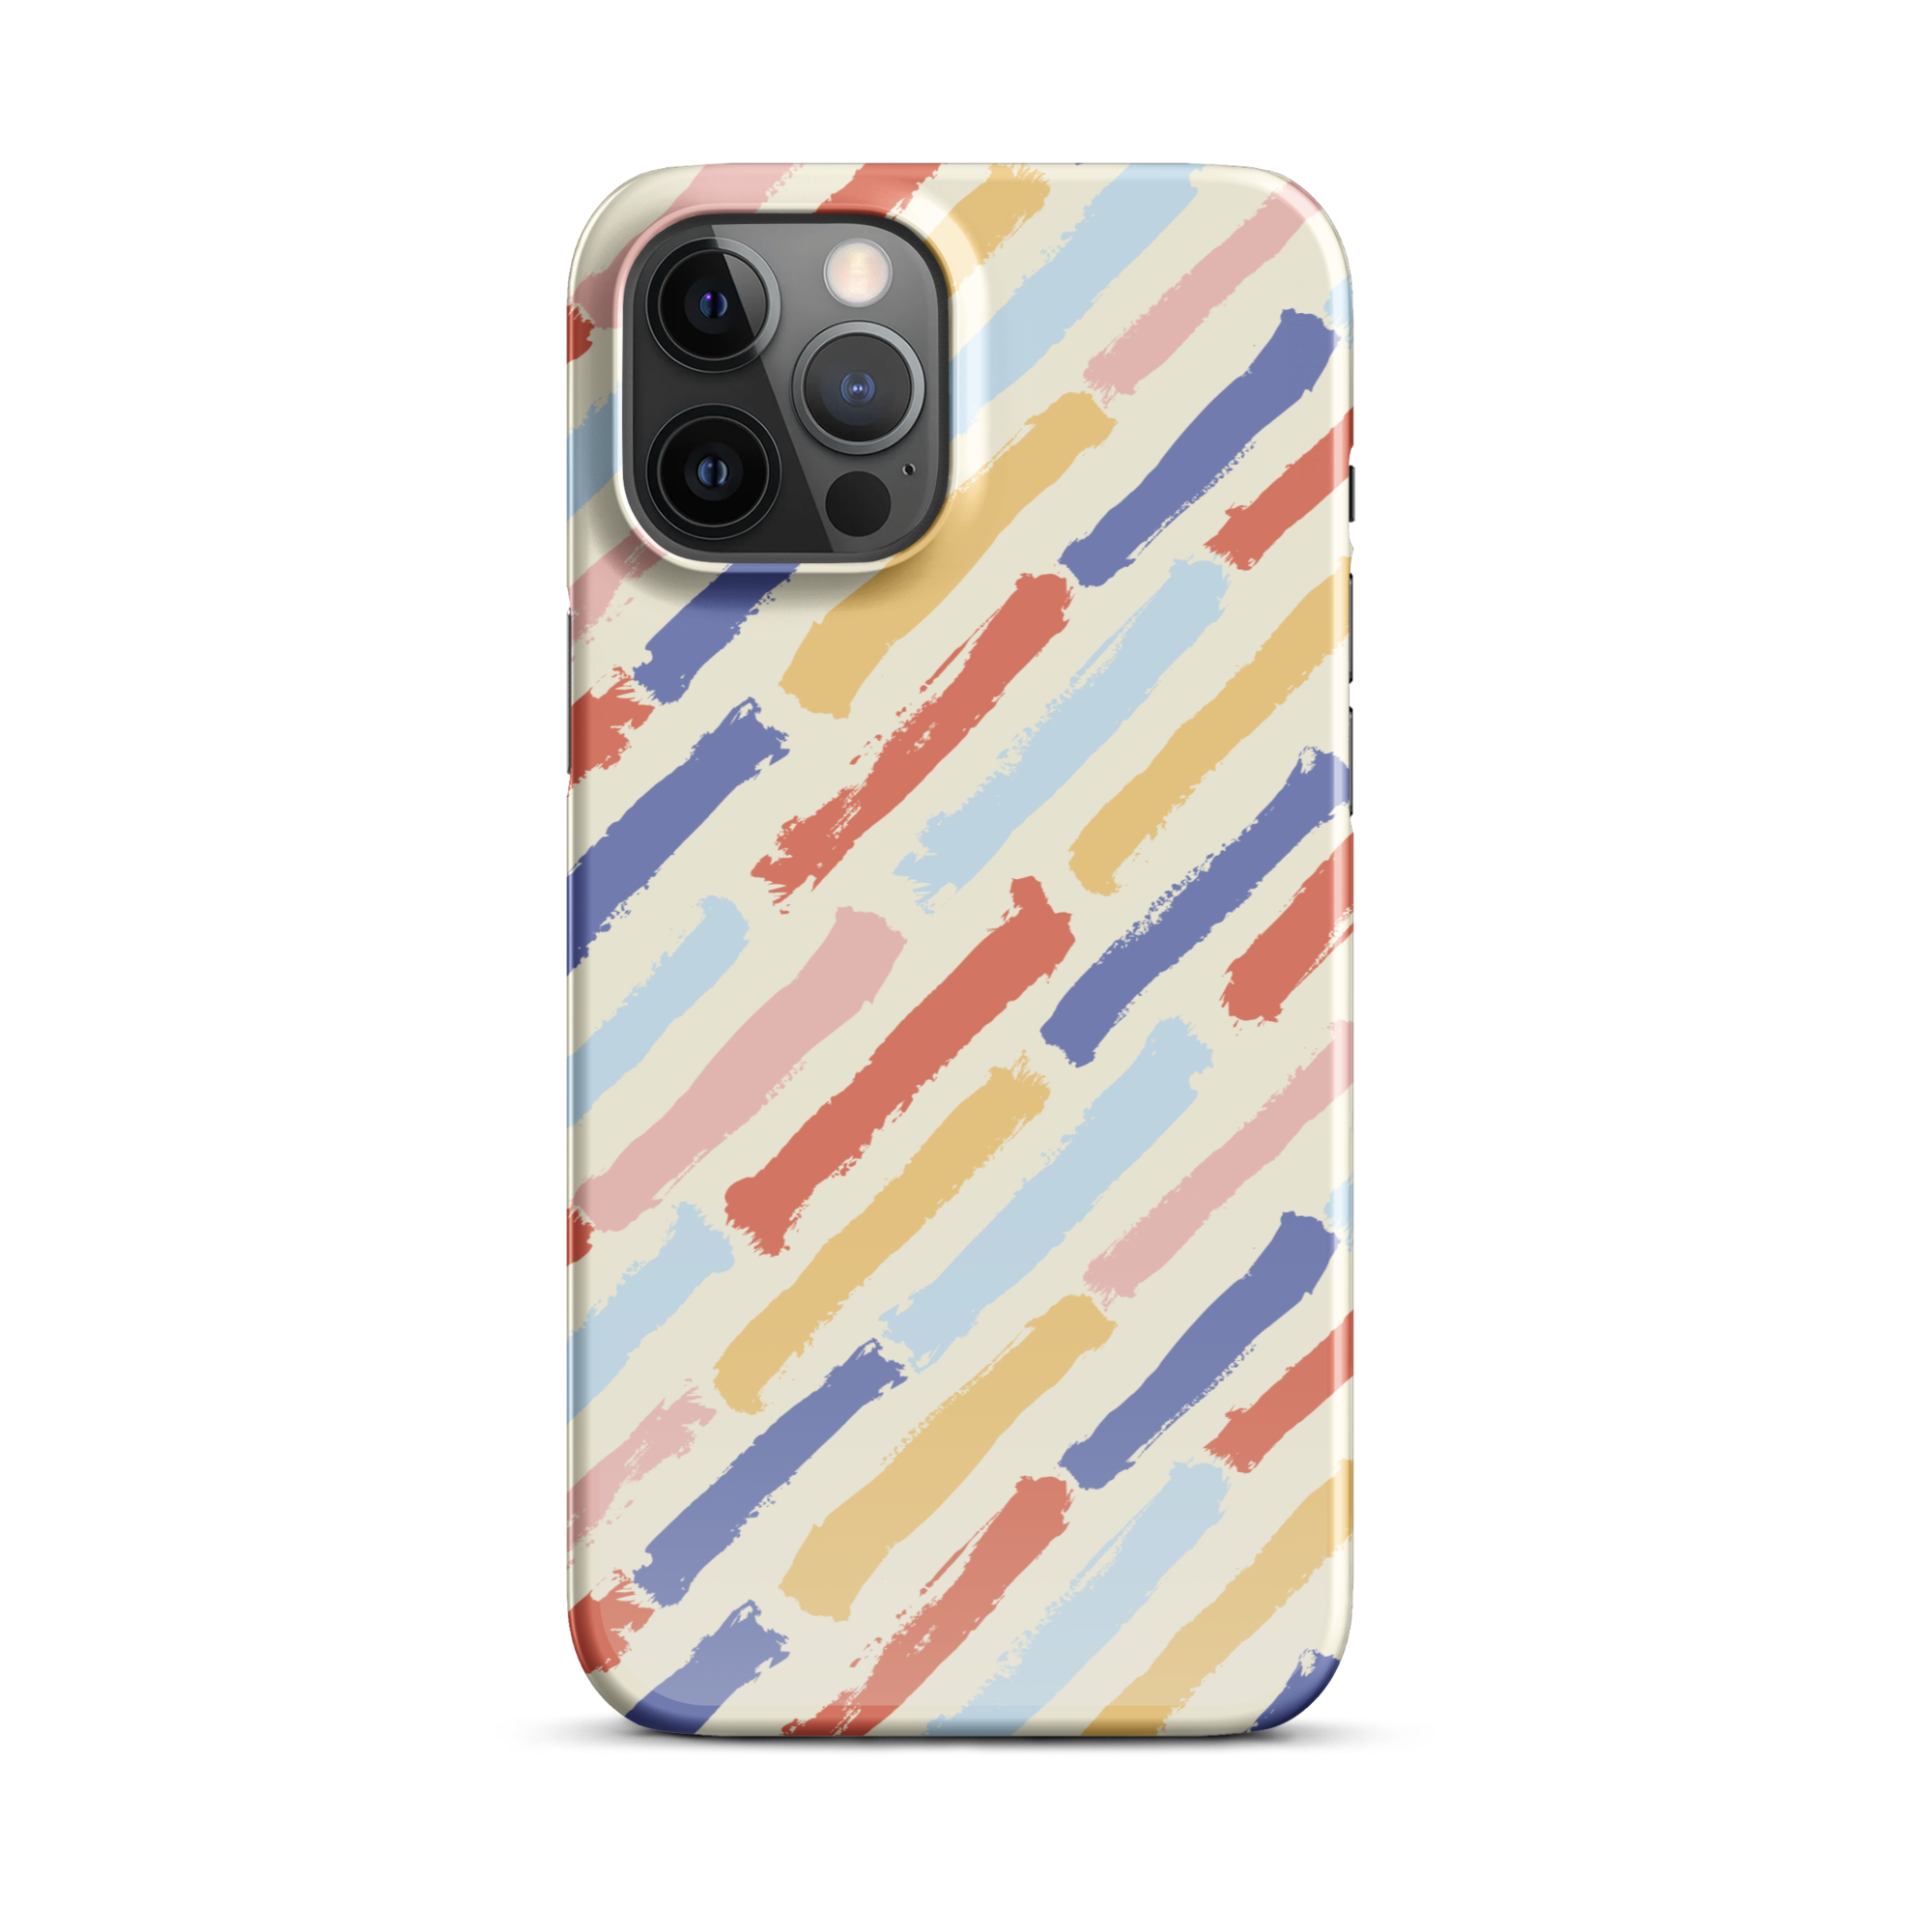 Pastel Paint Strokes iPhone 12 Pro Max Case